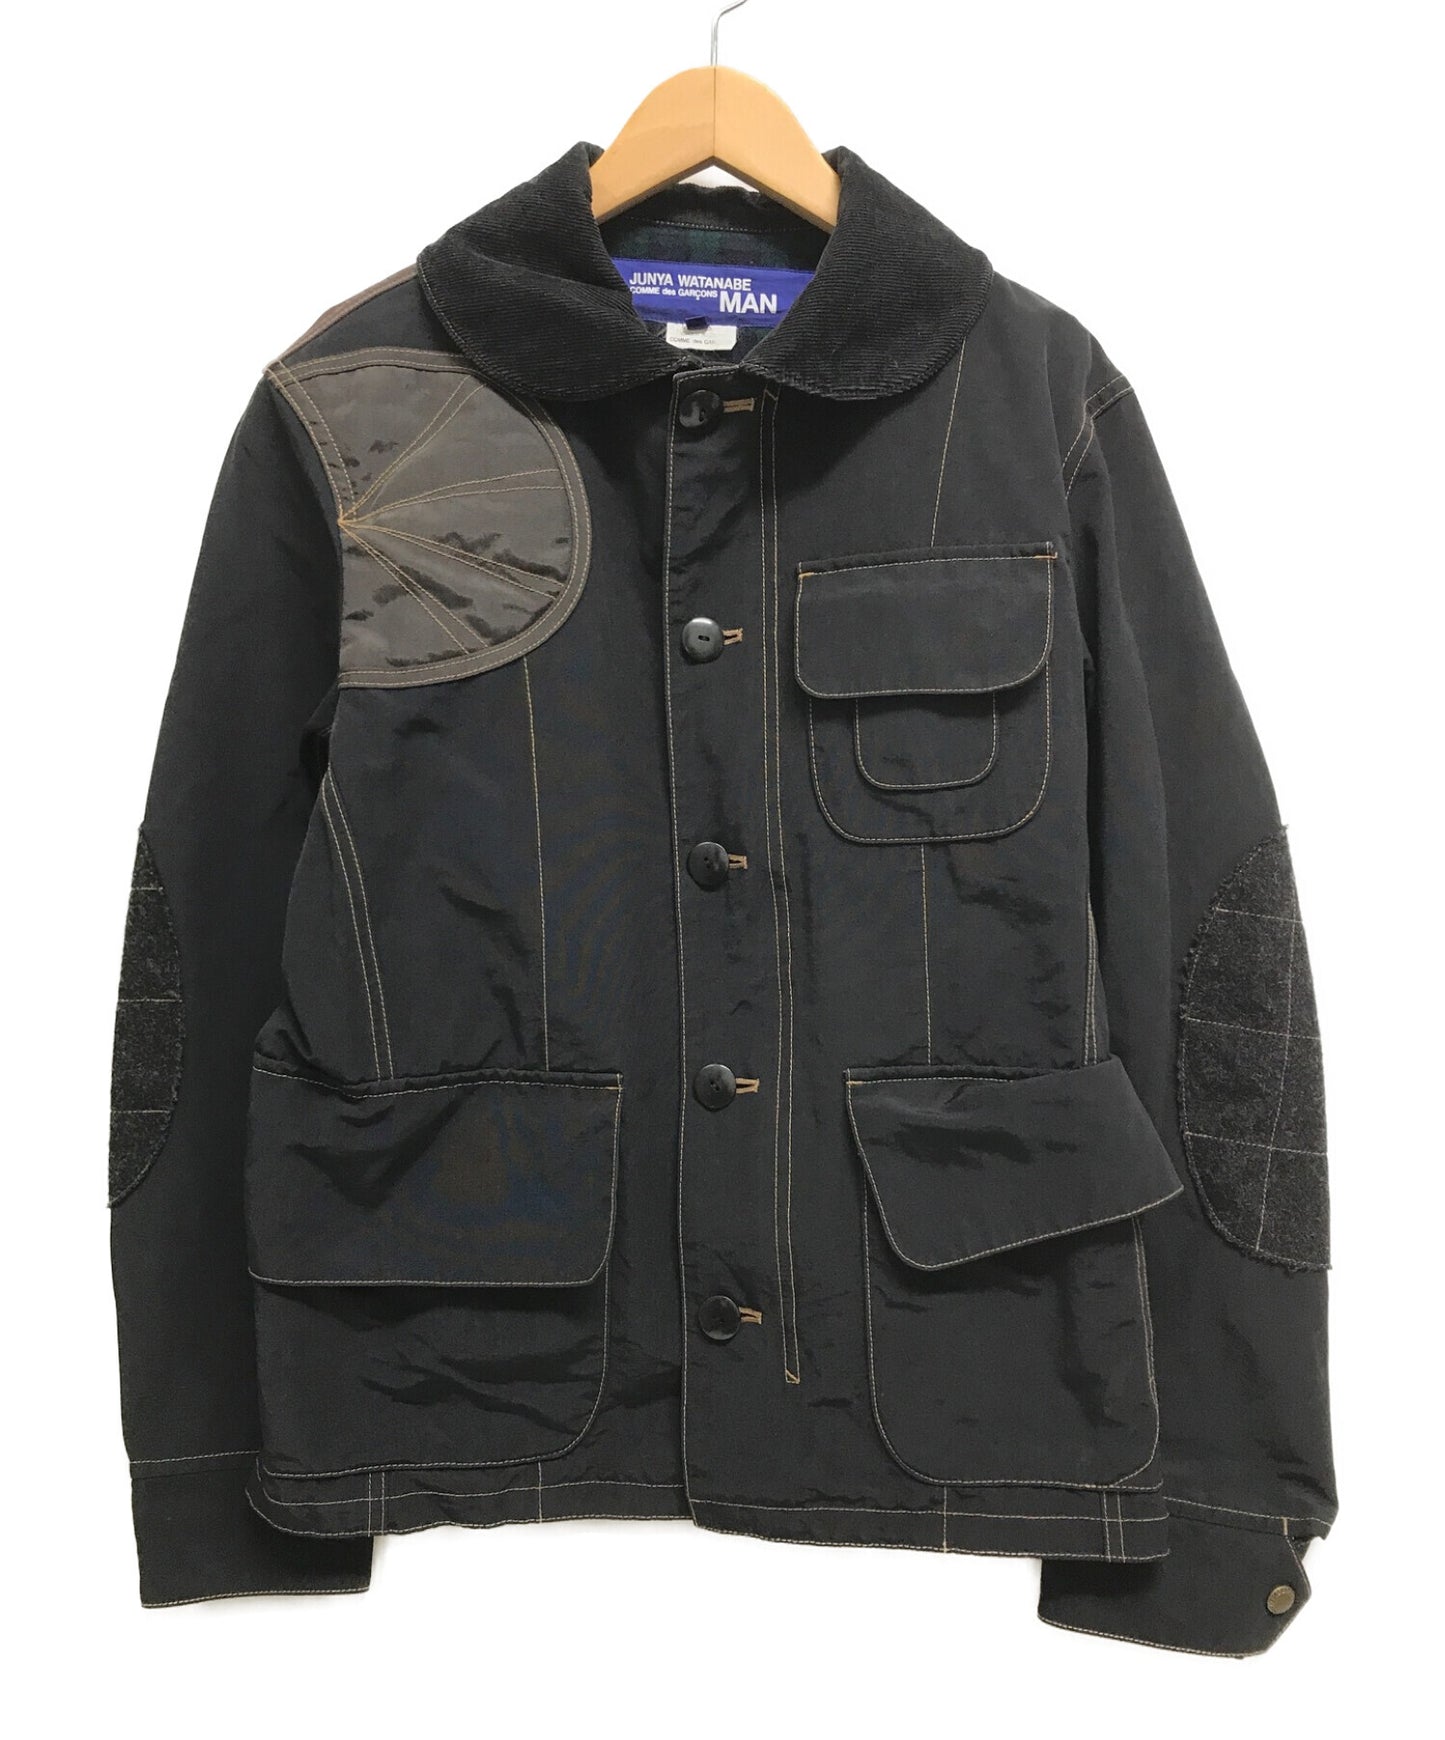 Comme des Garcons Junya Watanabe Man Coveral 재킷 팔꿈치 패치 WD-J016